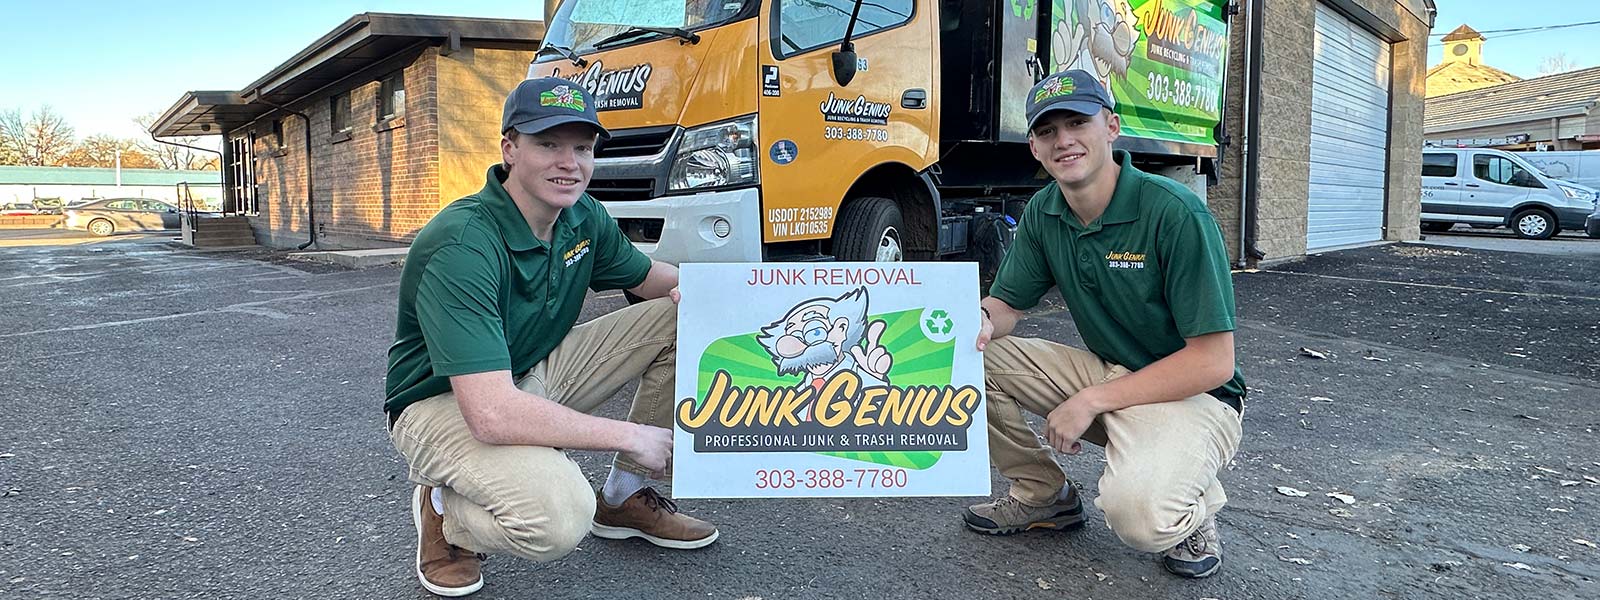 Junk Genius Experts Posing